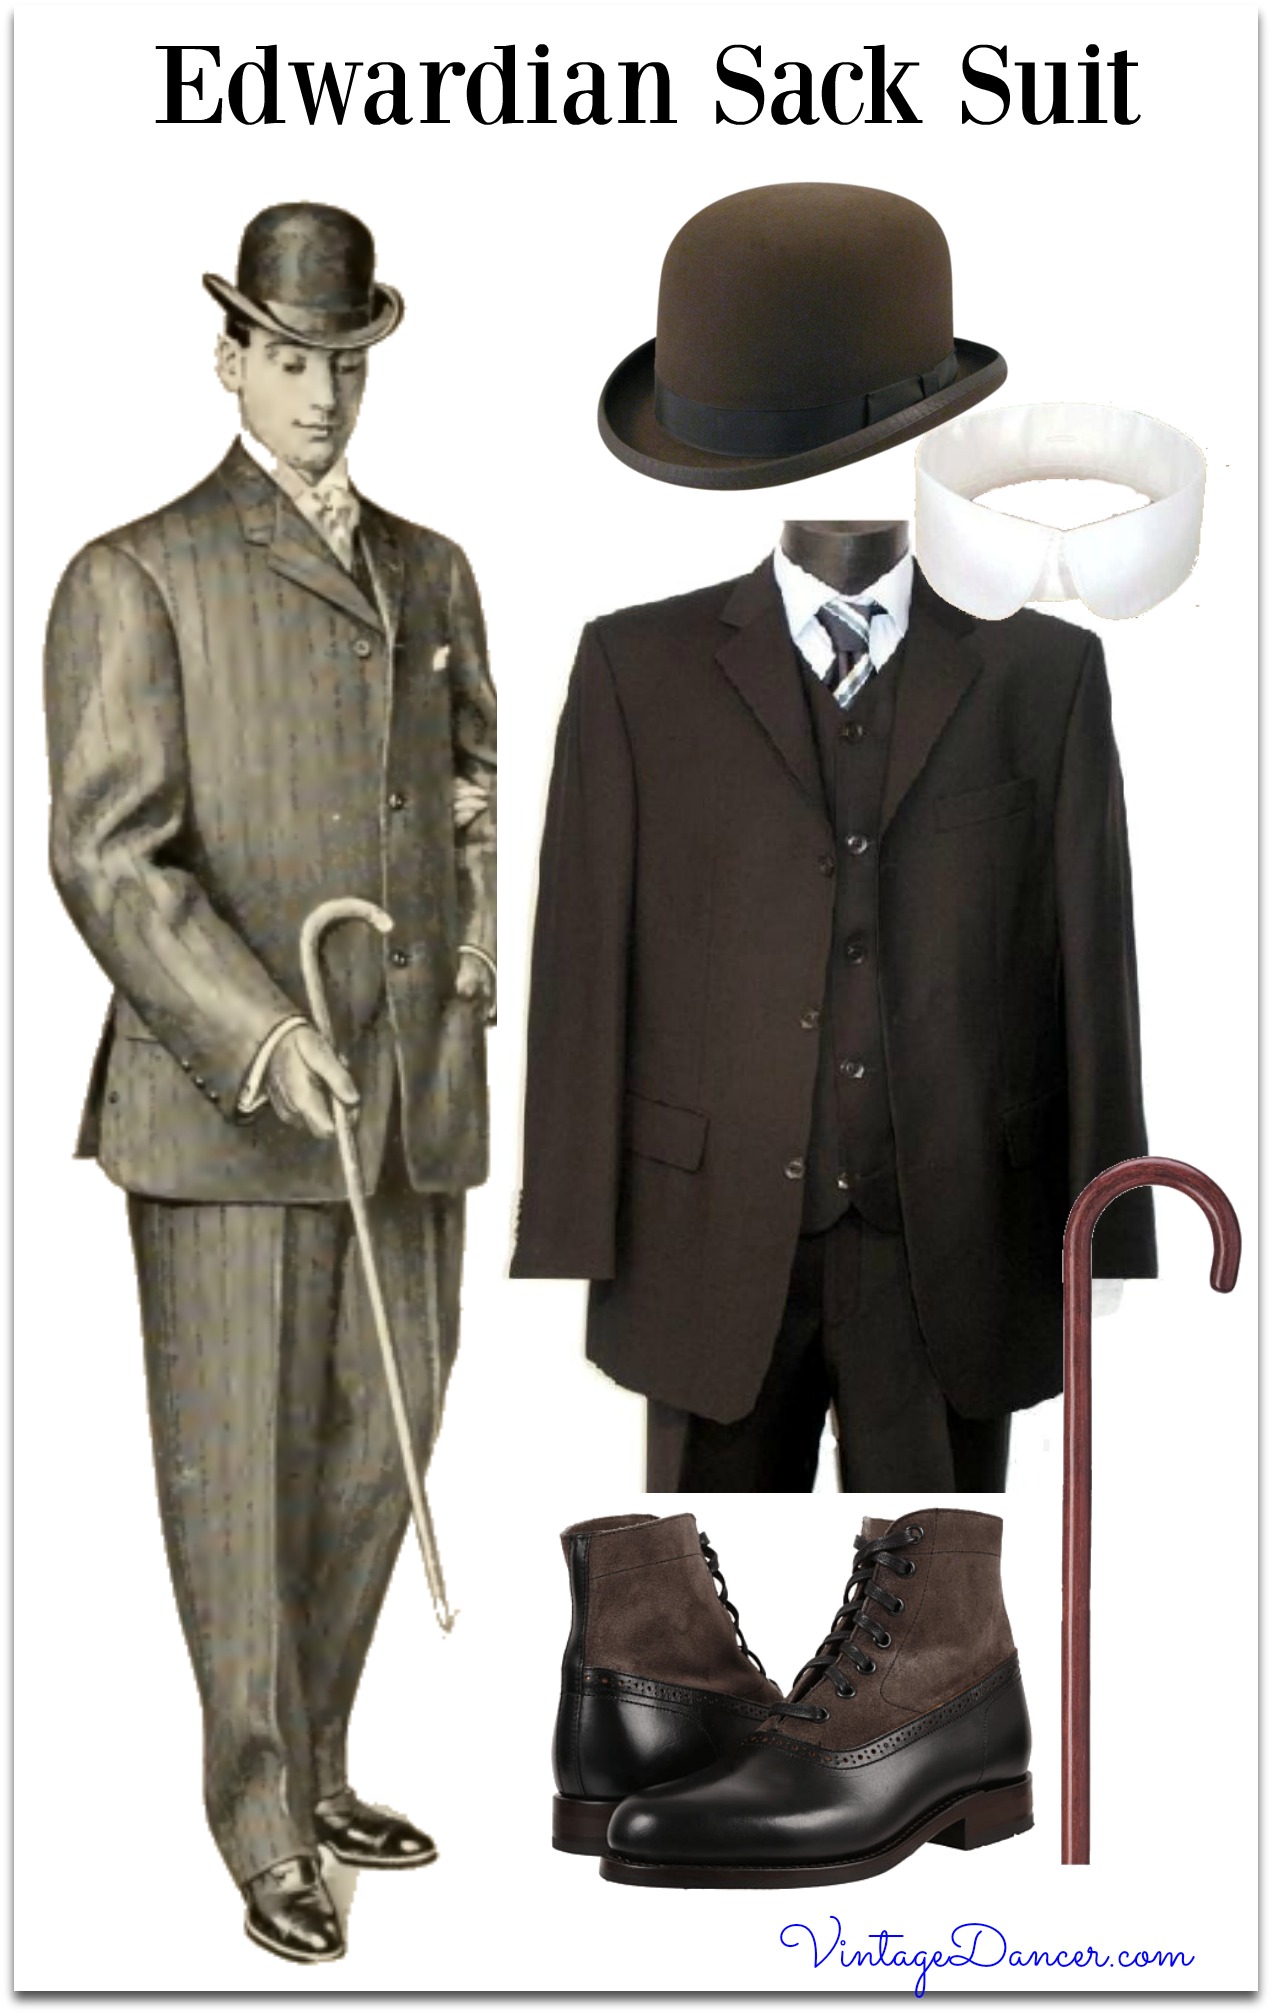 1900s 1910s Mens Edwardian sack suit costume clothing fashion a2 vintagedancer com